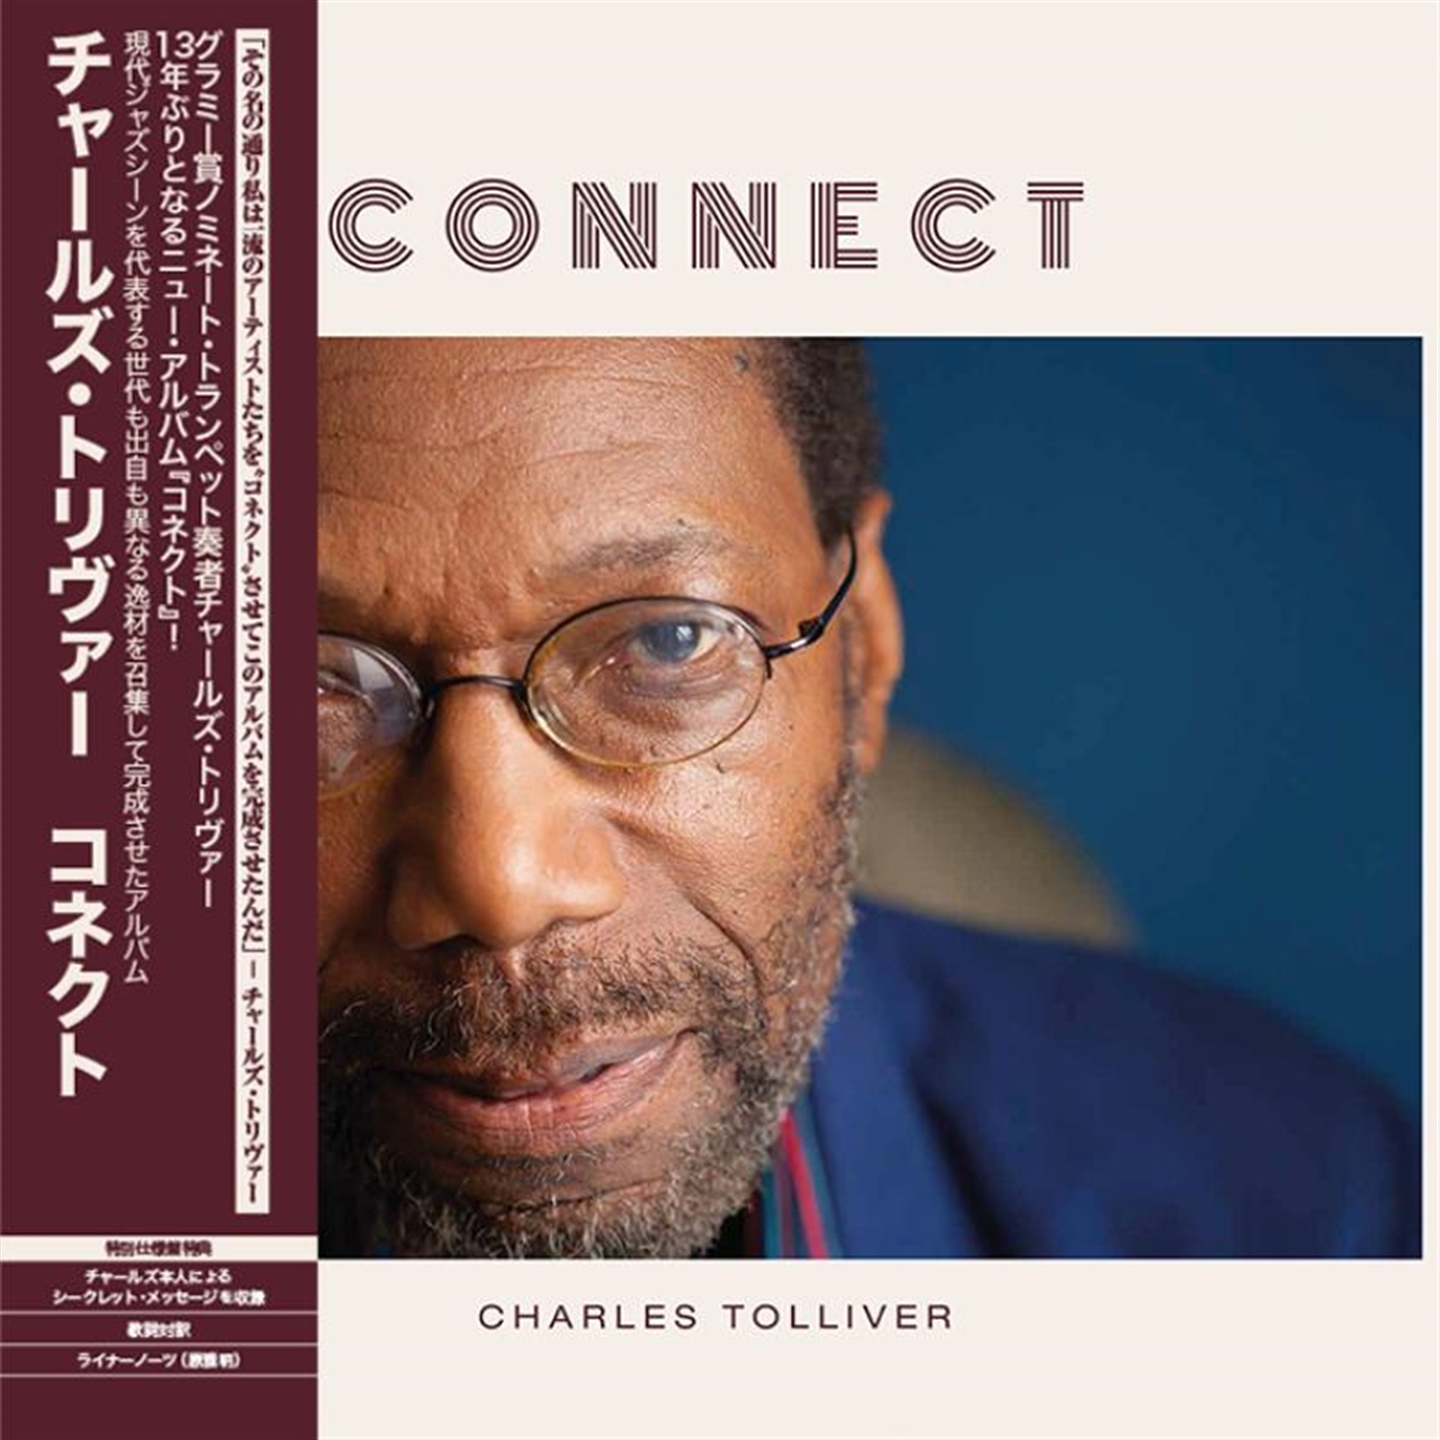 CONNECT (JAPANESE VERSION) [LP]